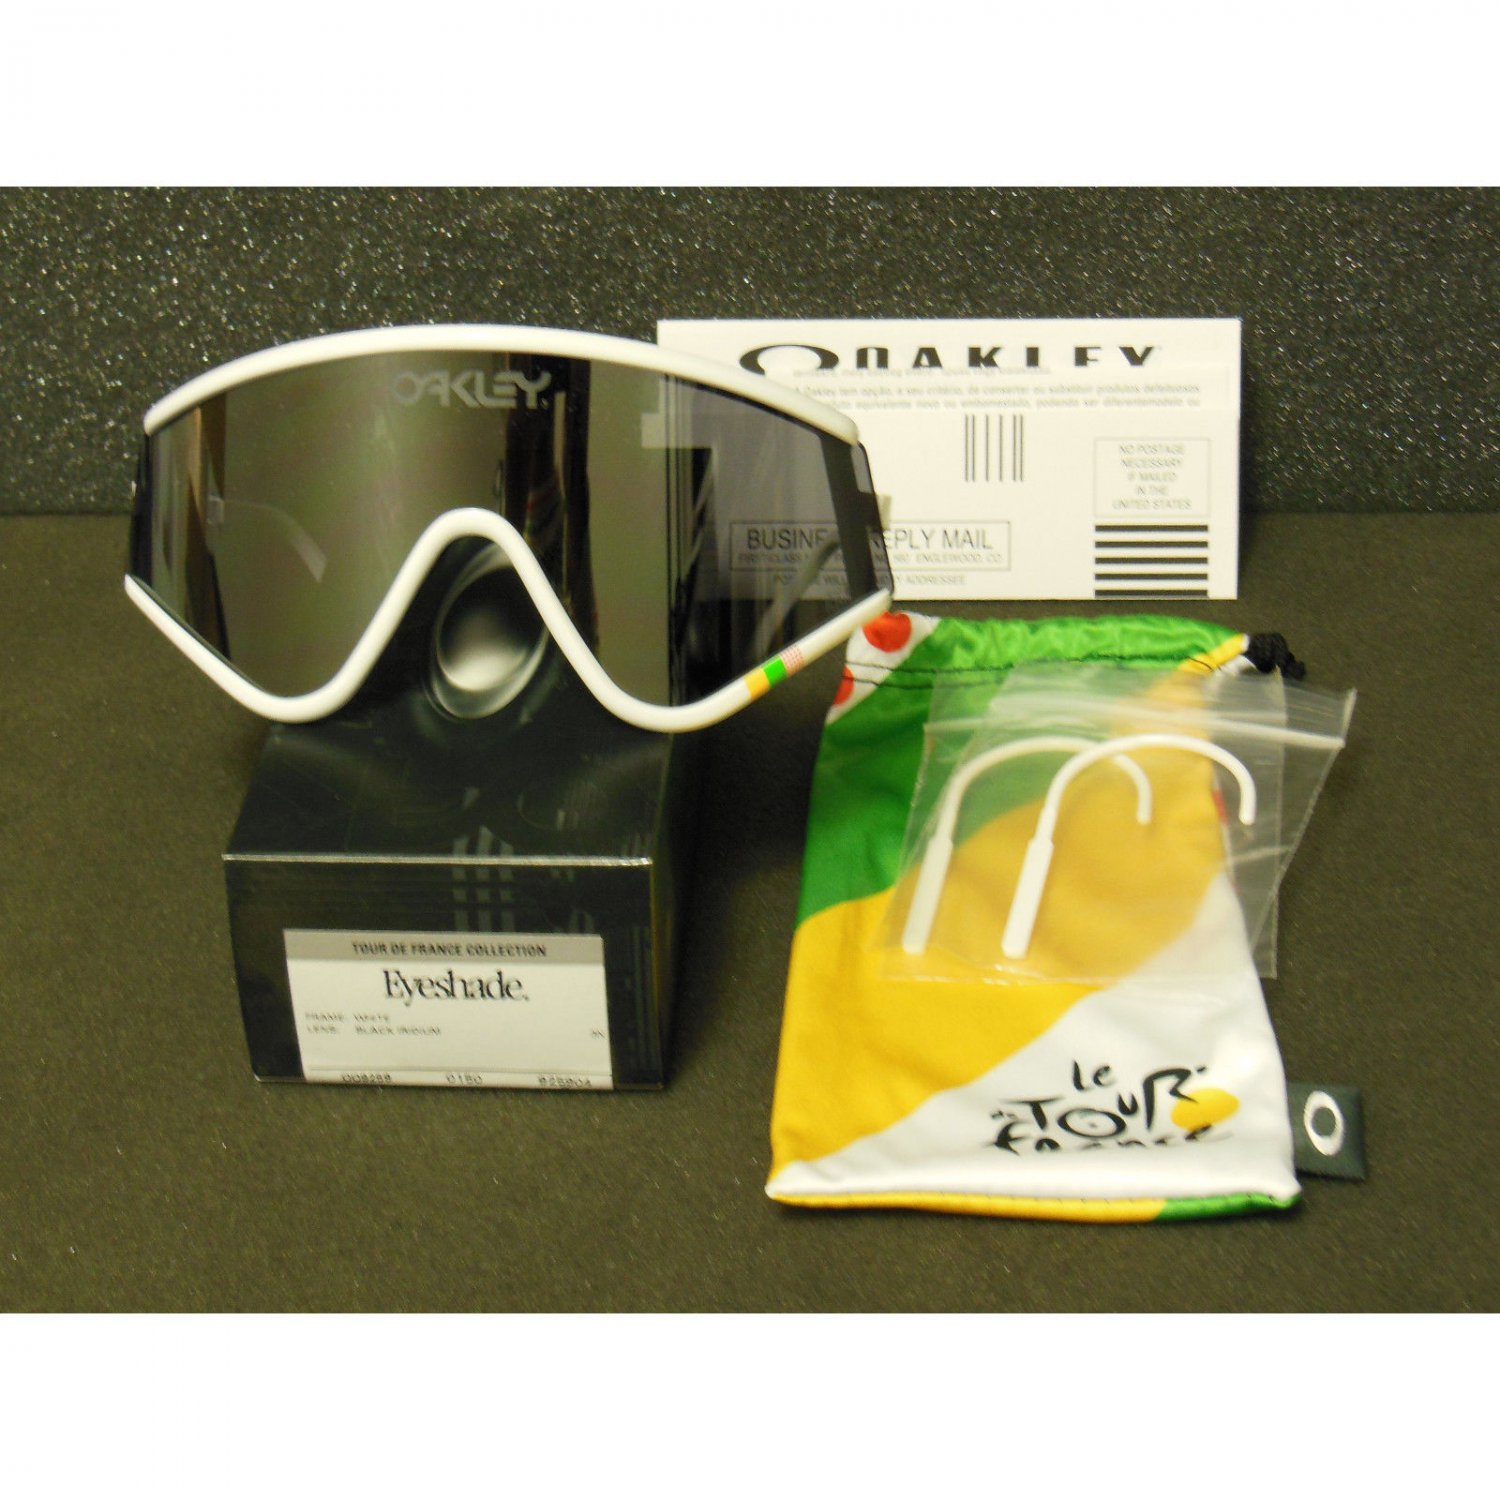 Maestro fire stemning Oakley Eyeshade Tour de France Collection Retro Sunglasses, White/Black  Iridium